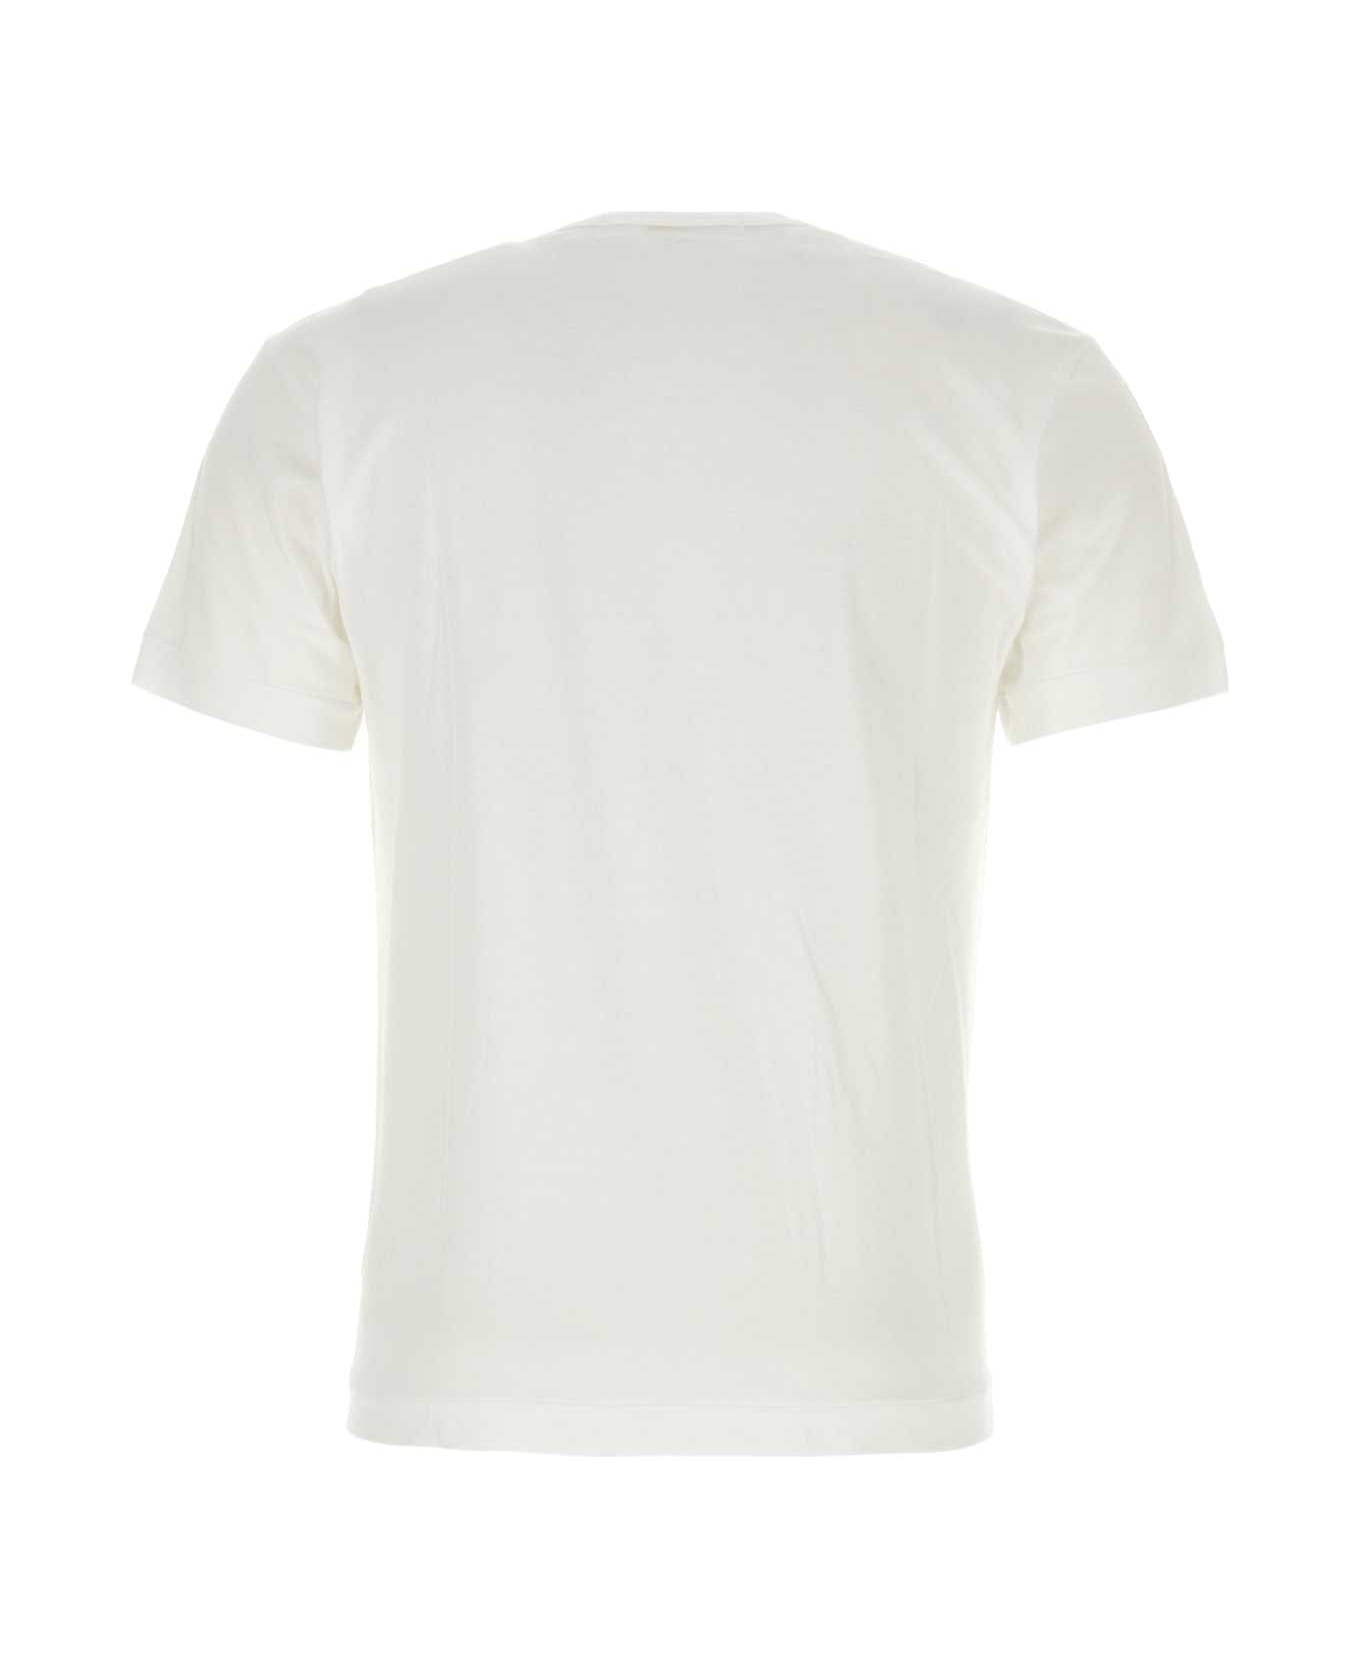 Comme des Garçons Play White Cotton T-shirt - GREEN シャツ